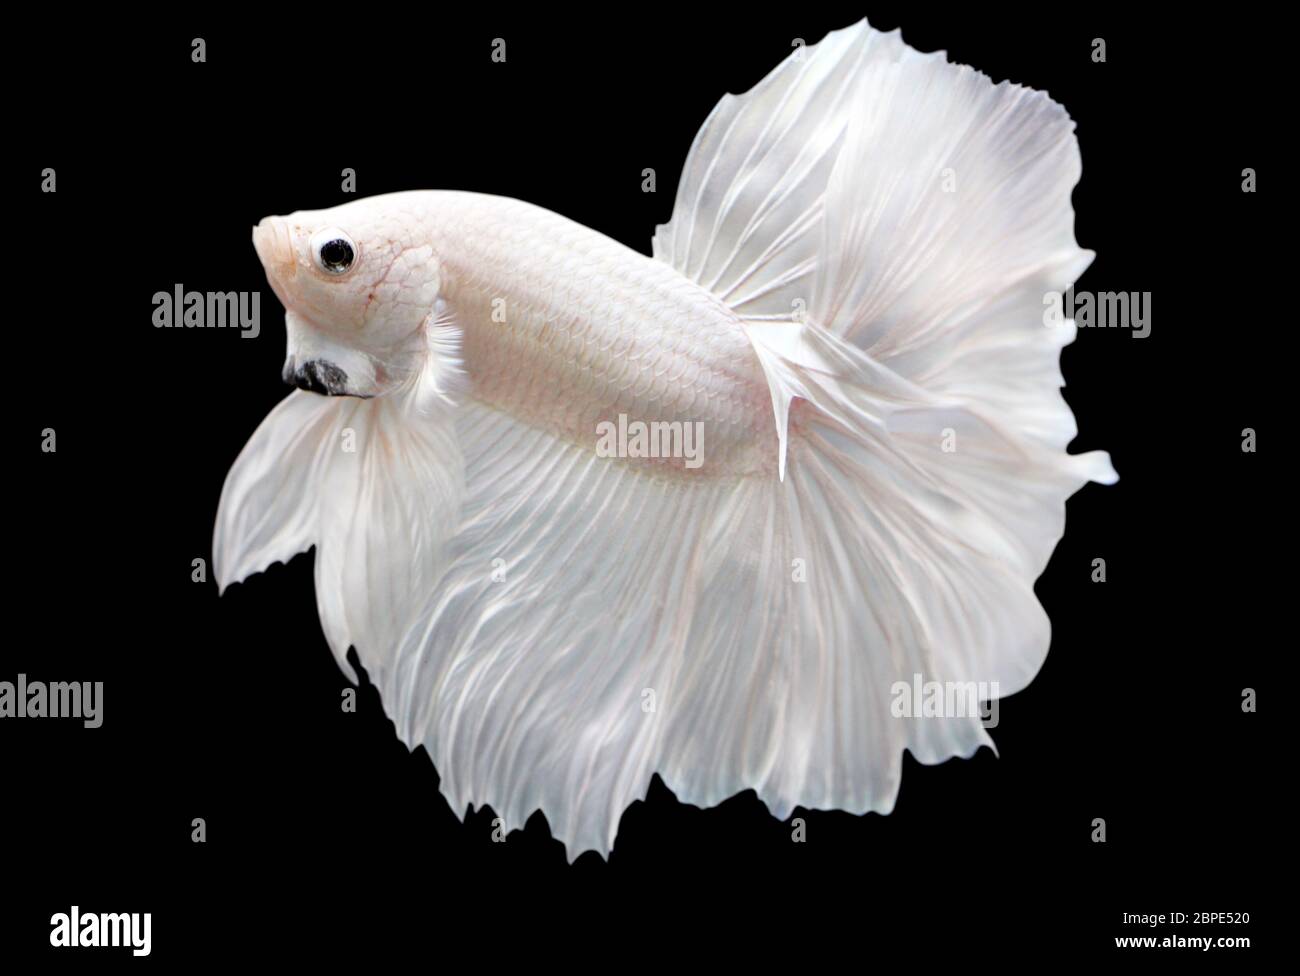 Betta White Platinum HM Halfmoon  Male or Plakat Fighting Fish Splendens On Black Background. Stock Photo